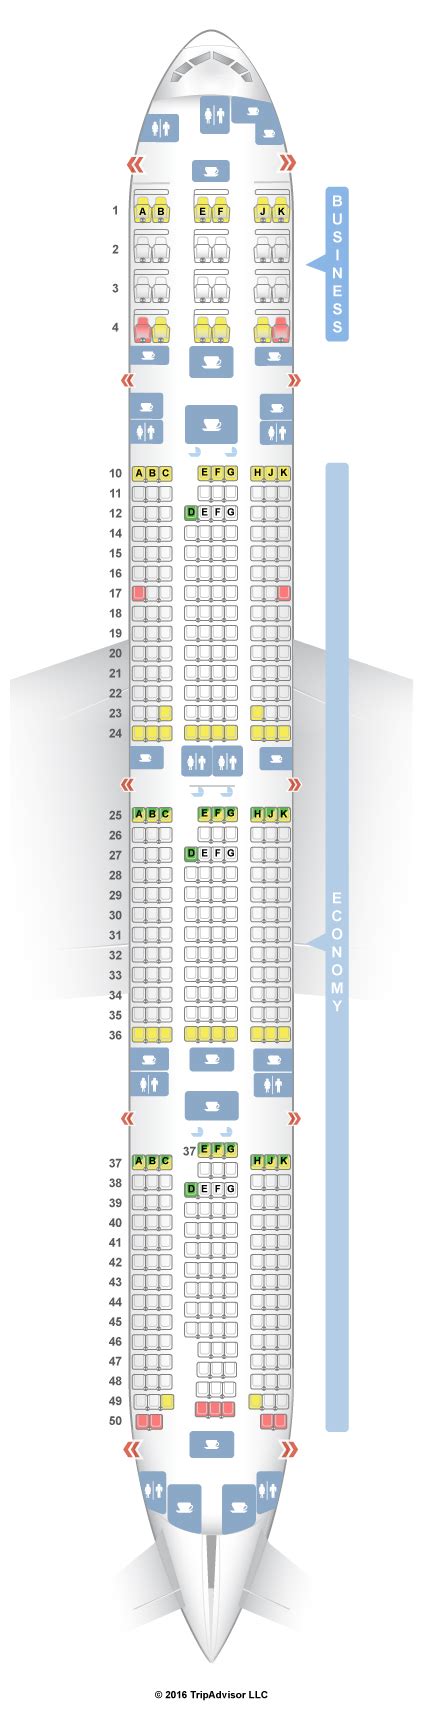 qatar 777-300 seat map